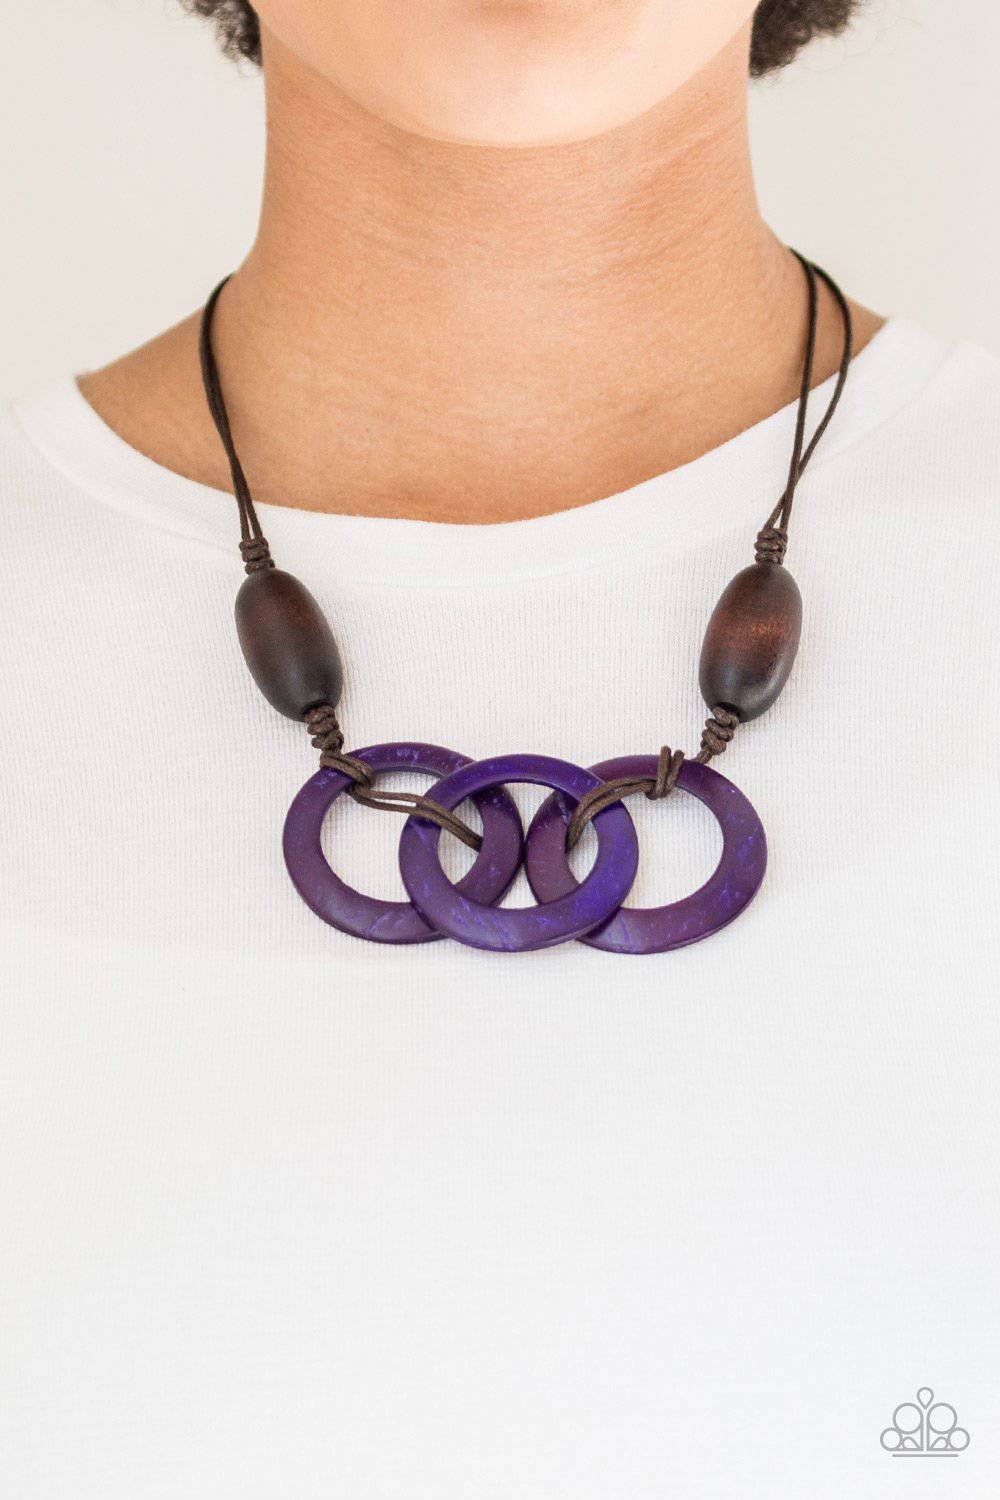 Bahama Drama - Purple Wood Necklace - Paparazzi Accessories - GlaMarous Titi Jewels